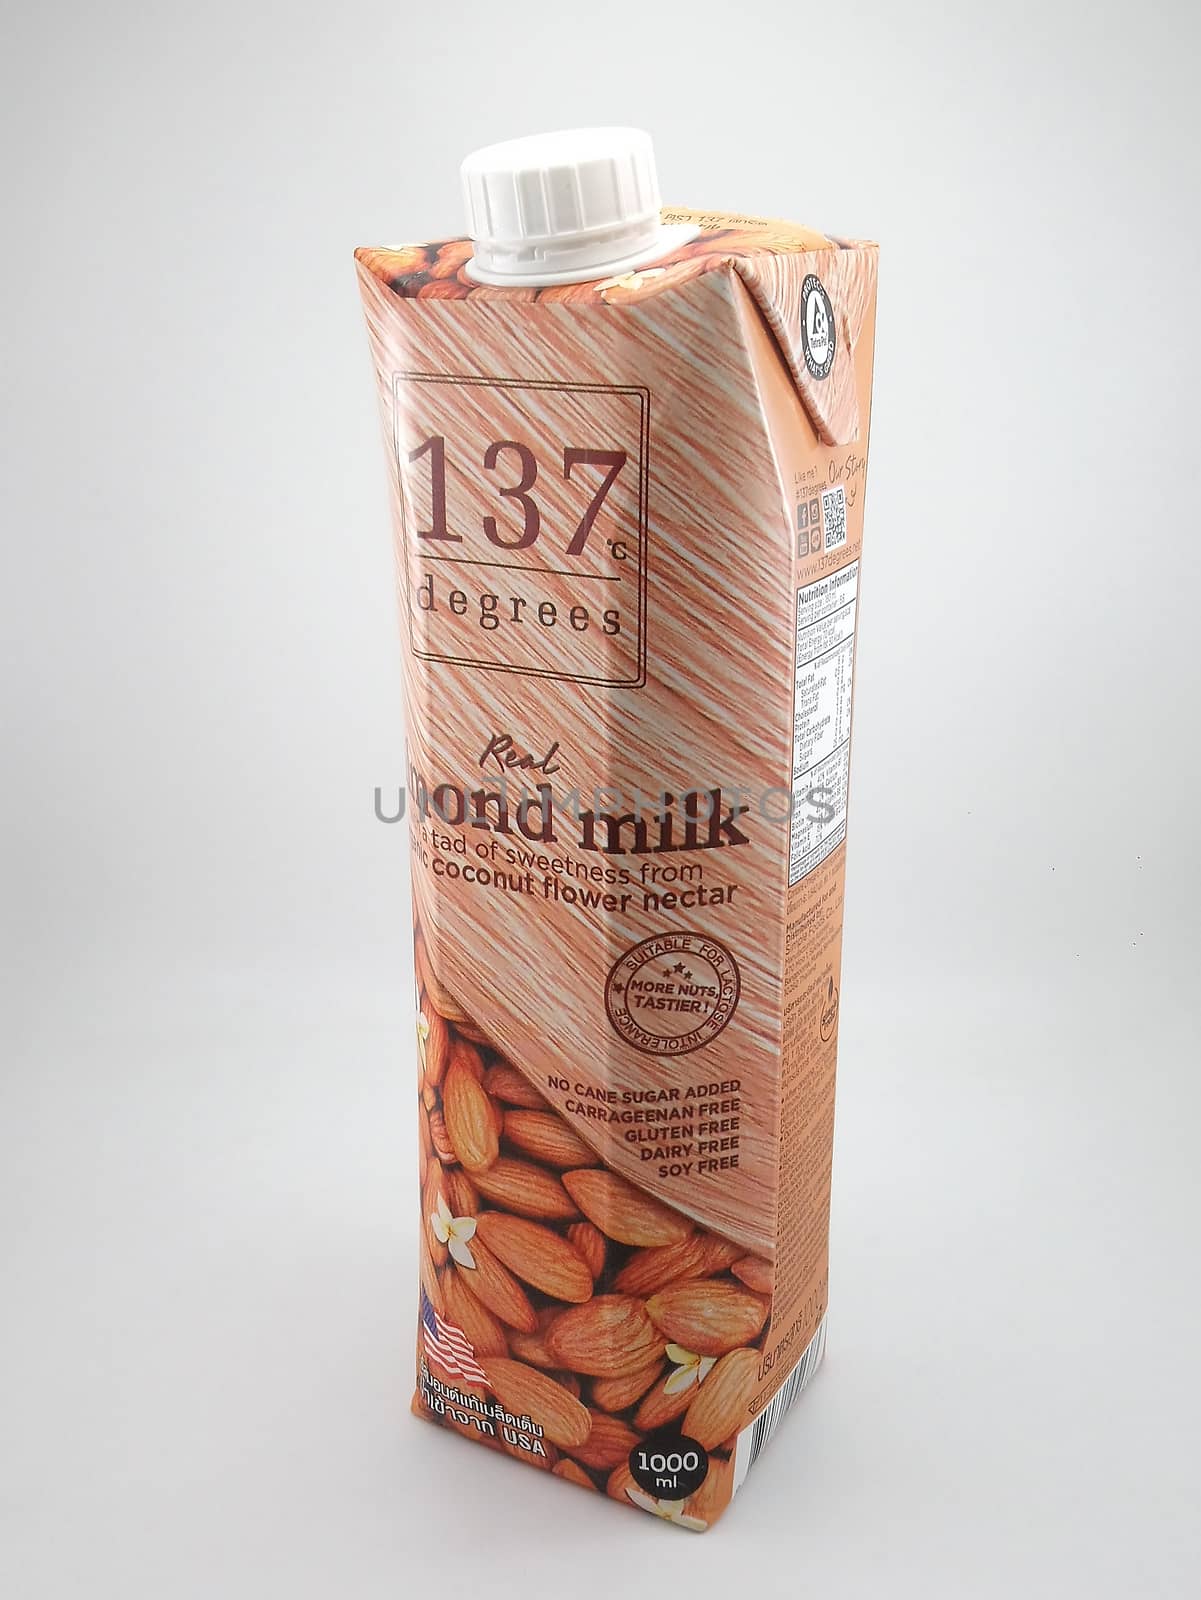 137 degrees almond milk in Manila, Philippines by imwaltersy